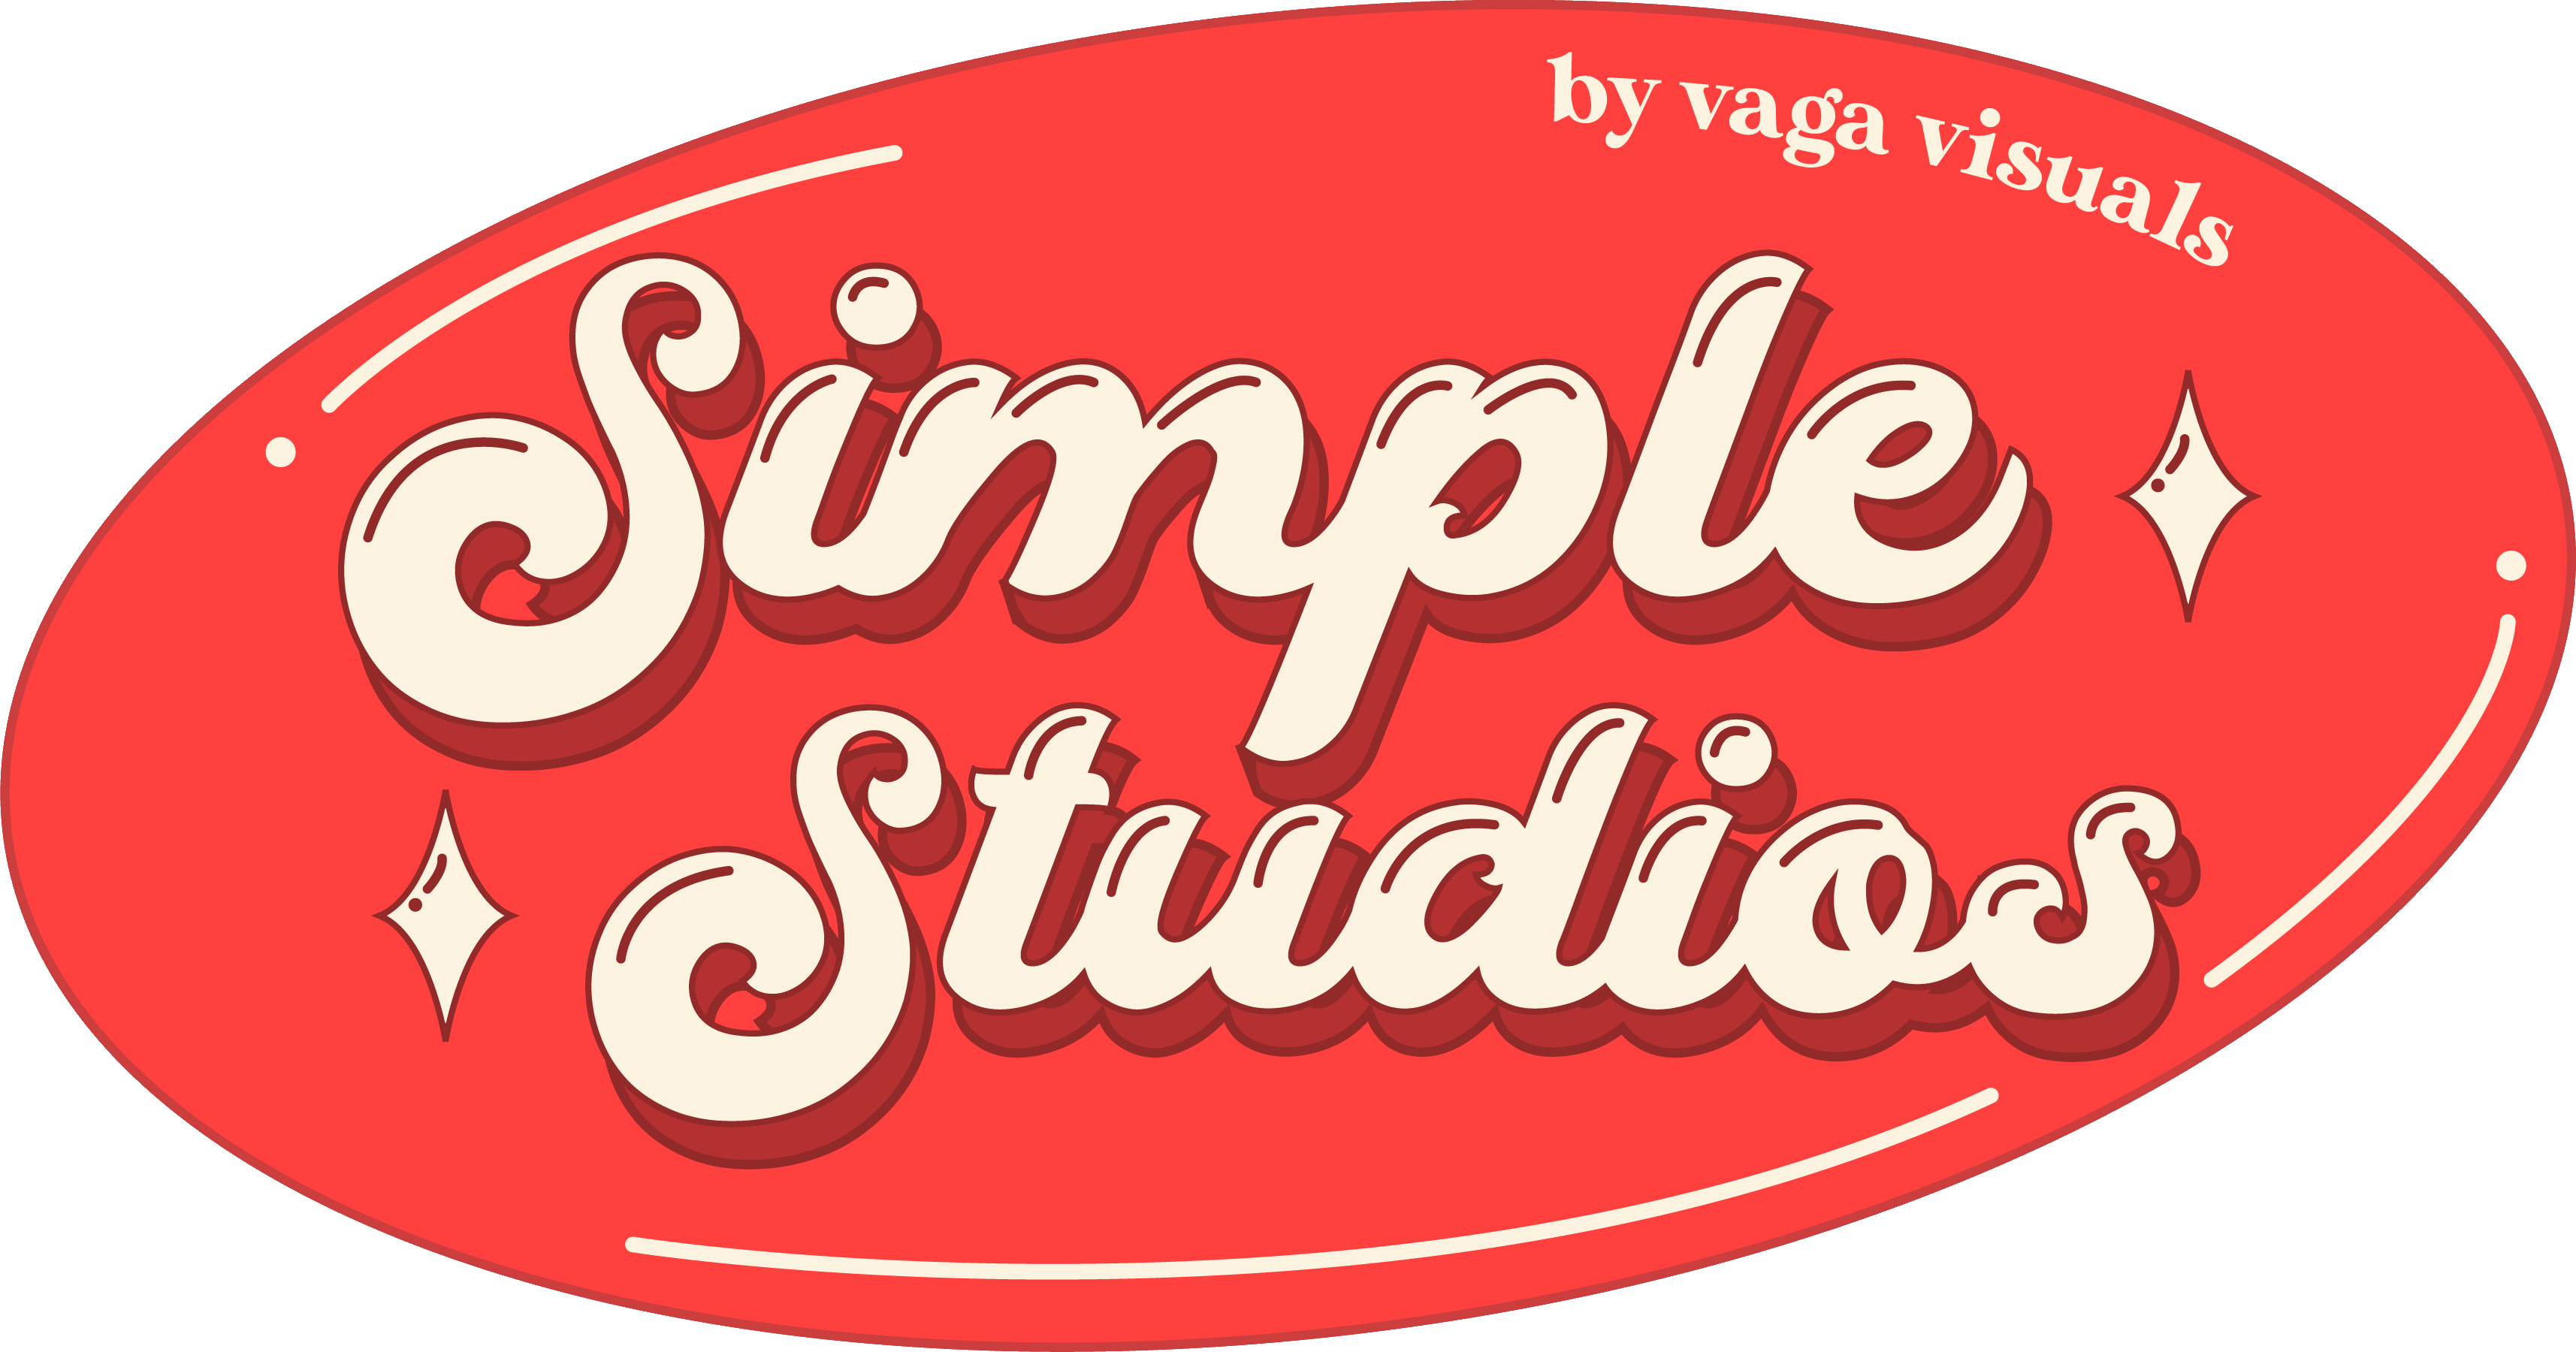 Simple Studios logo